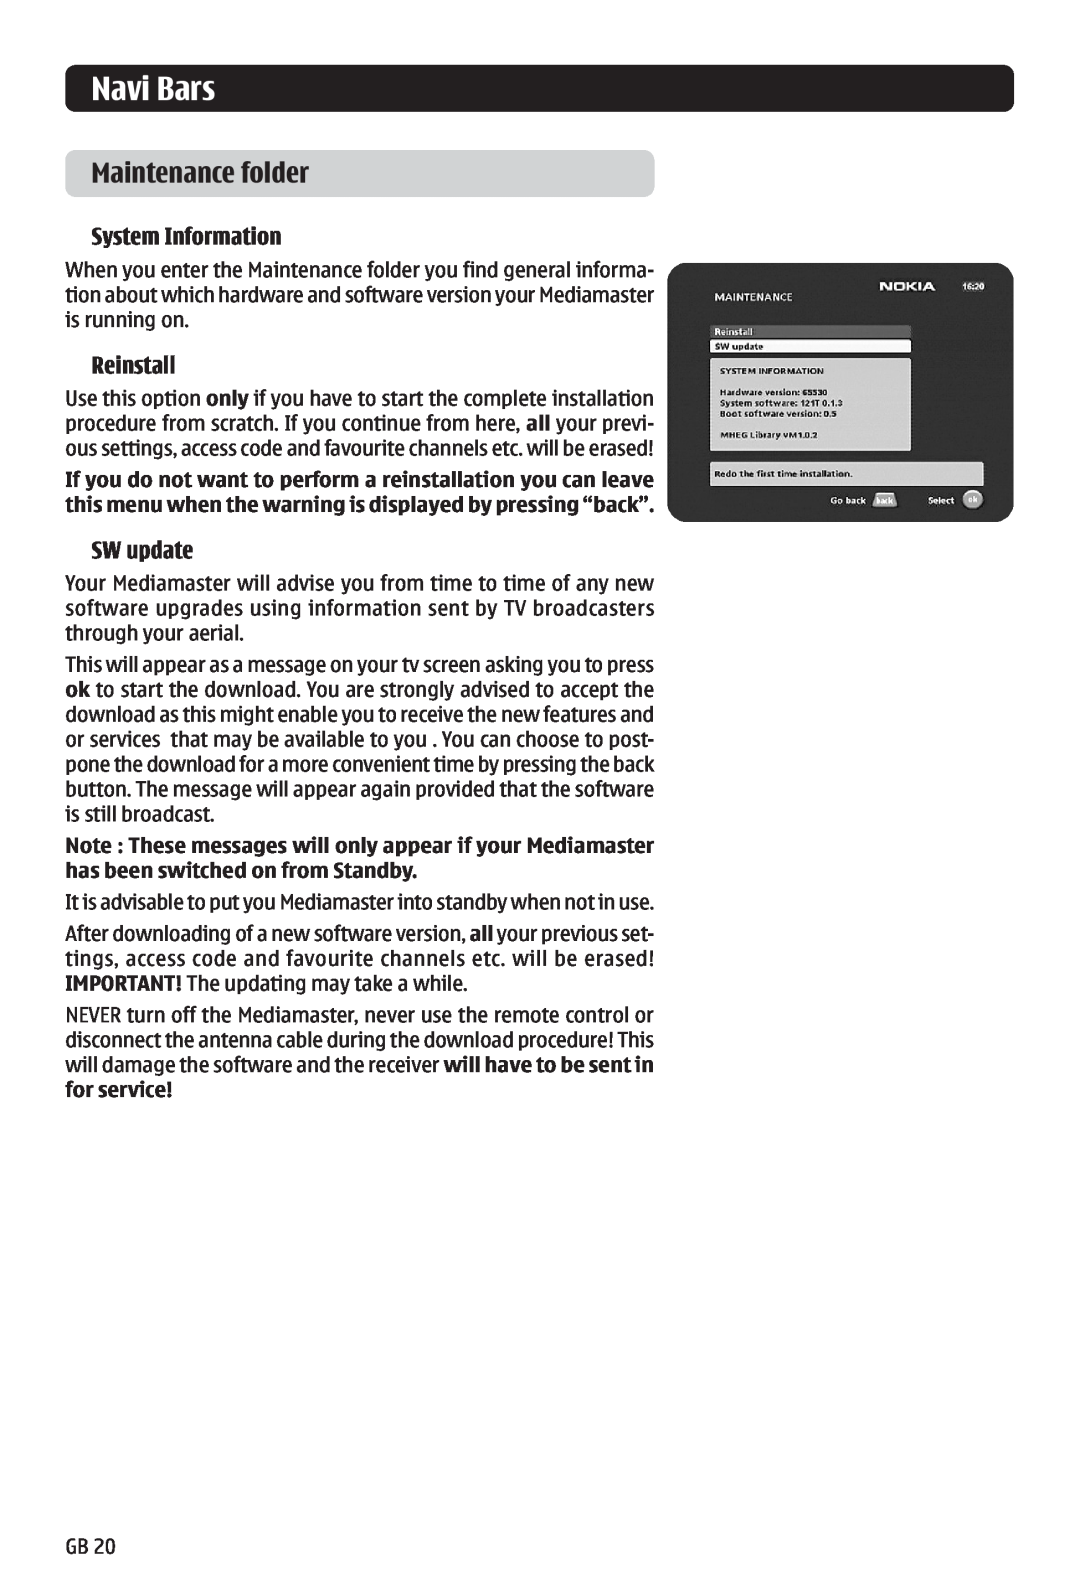 Nokia 121 T manual Maintenance folder, Navi Bars, System Information, Reinstall, SW update 